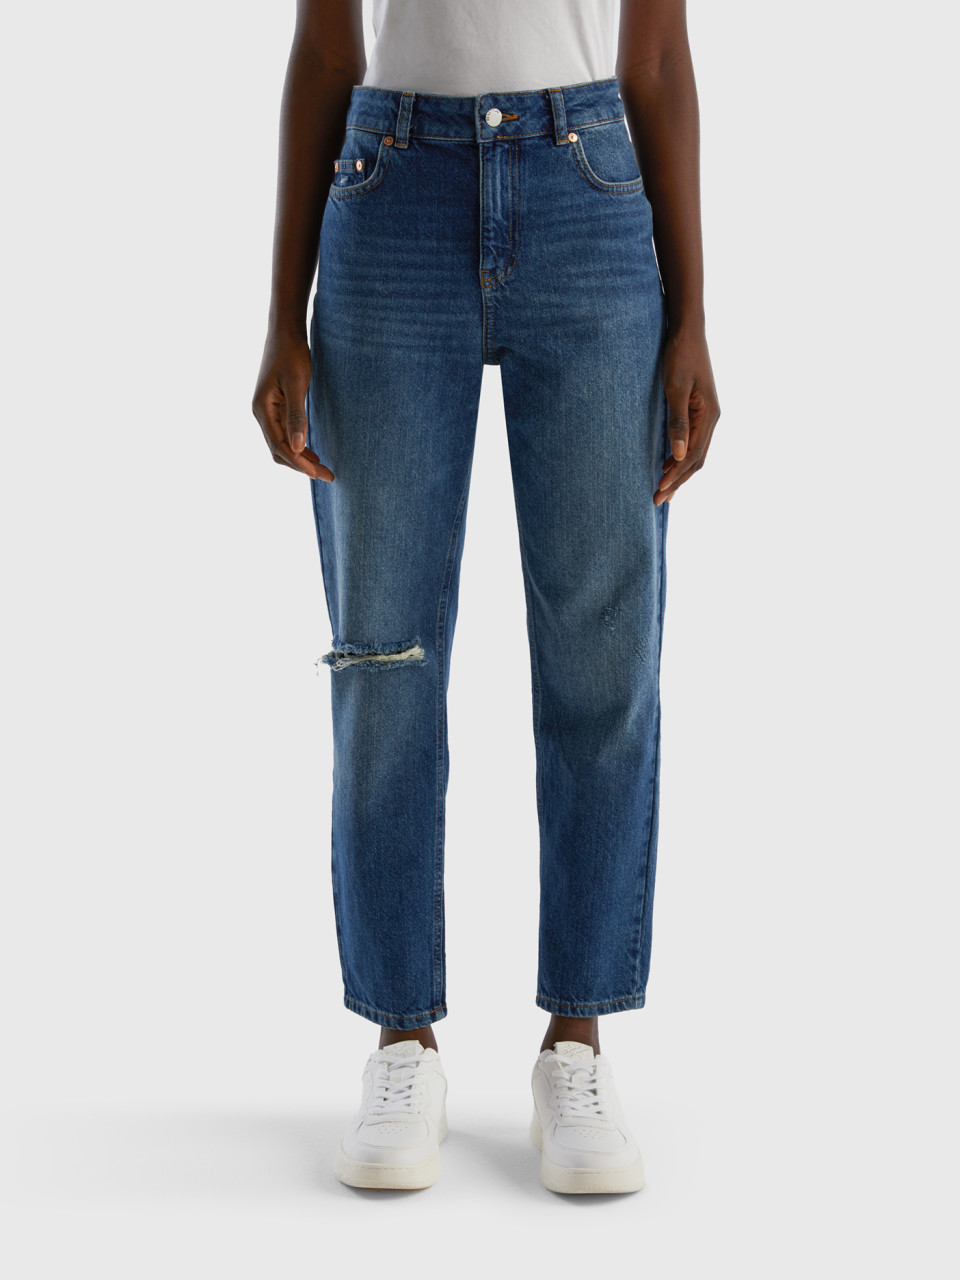 Benetton, Cropped High-waisted Jeans, Dark Blue, Women